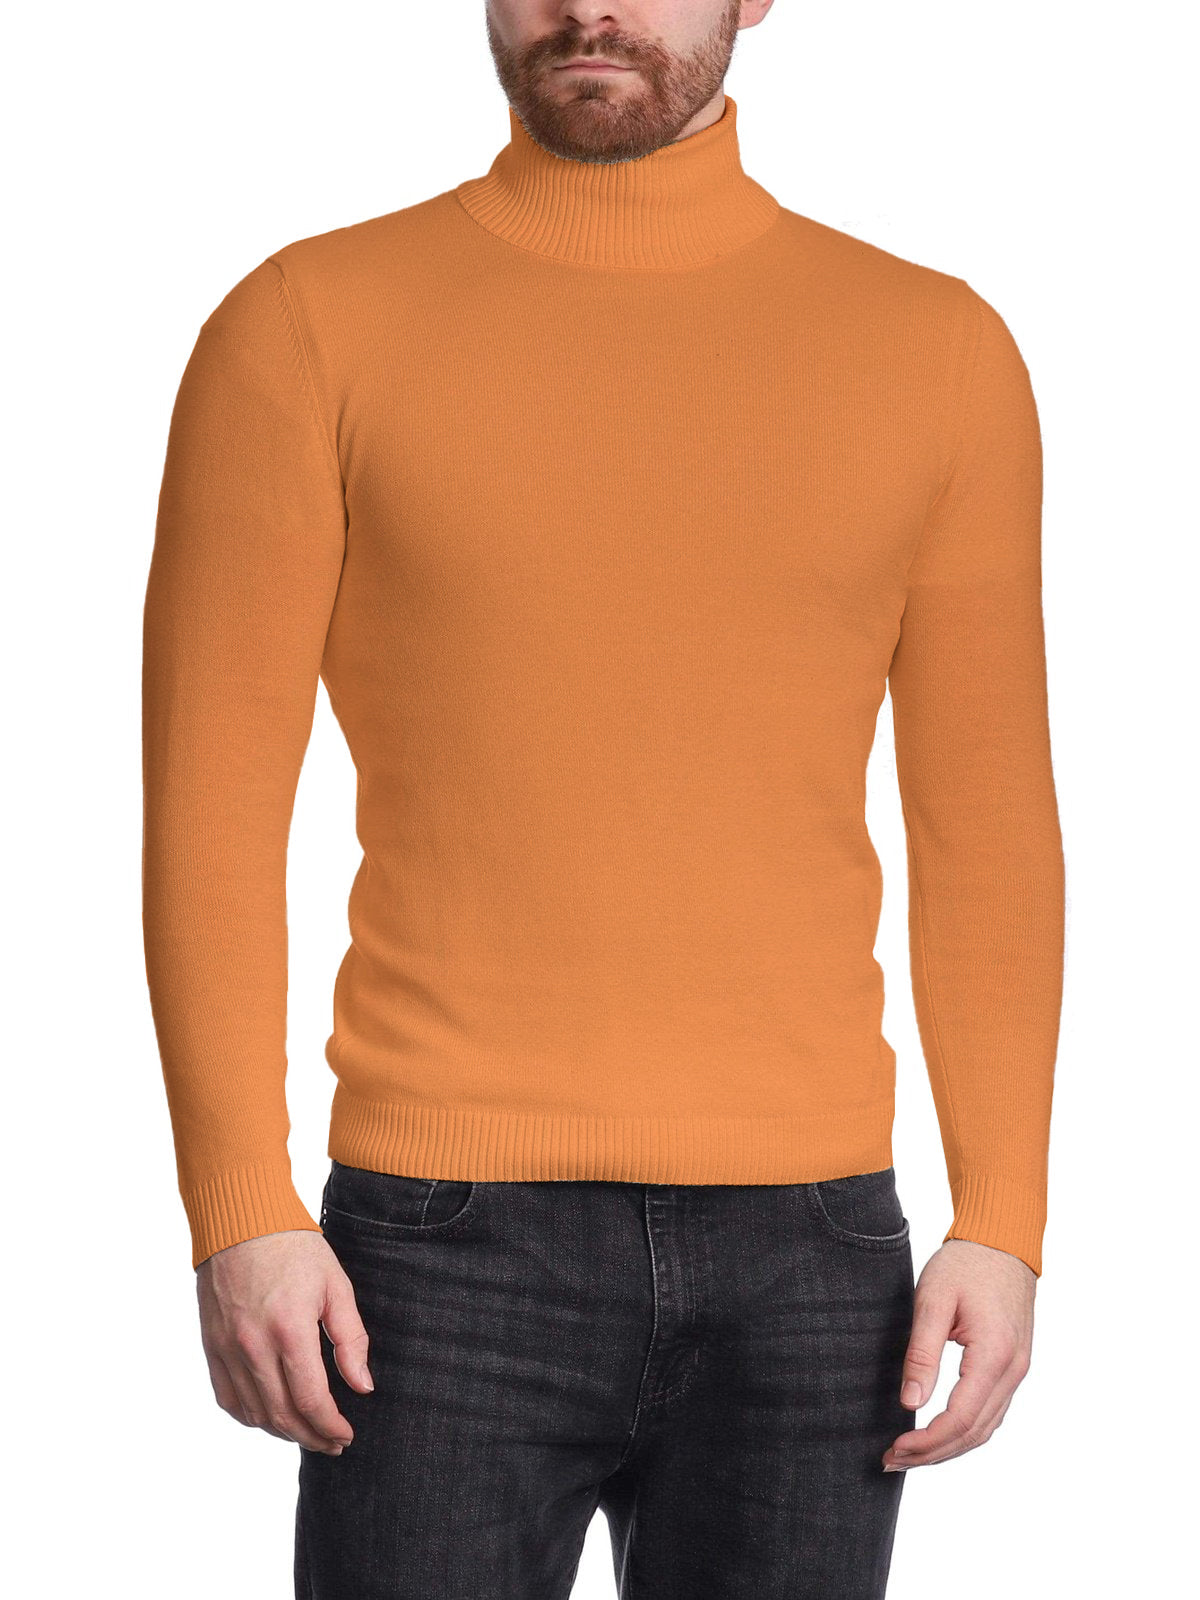 Arthur Black Men&#39;s Solid Copper Orange Pullover Cotton Blend Turtleneck Sweater Shirt